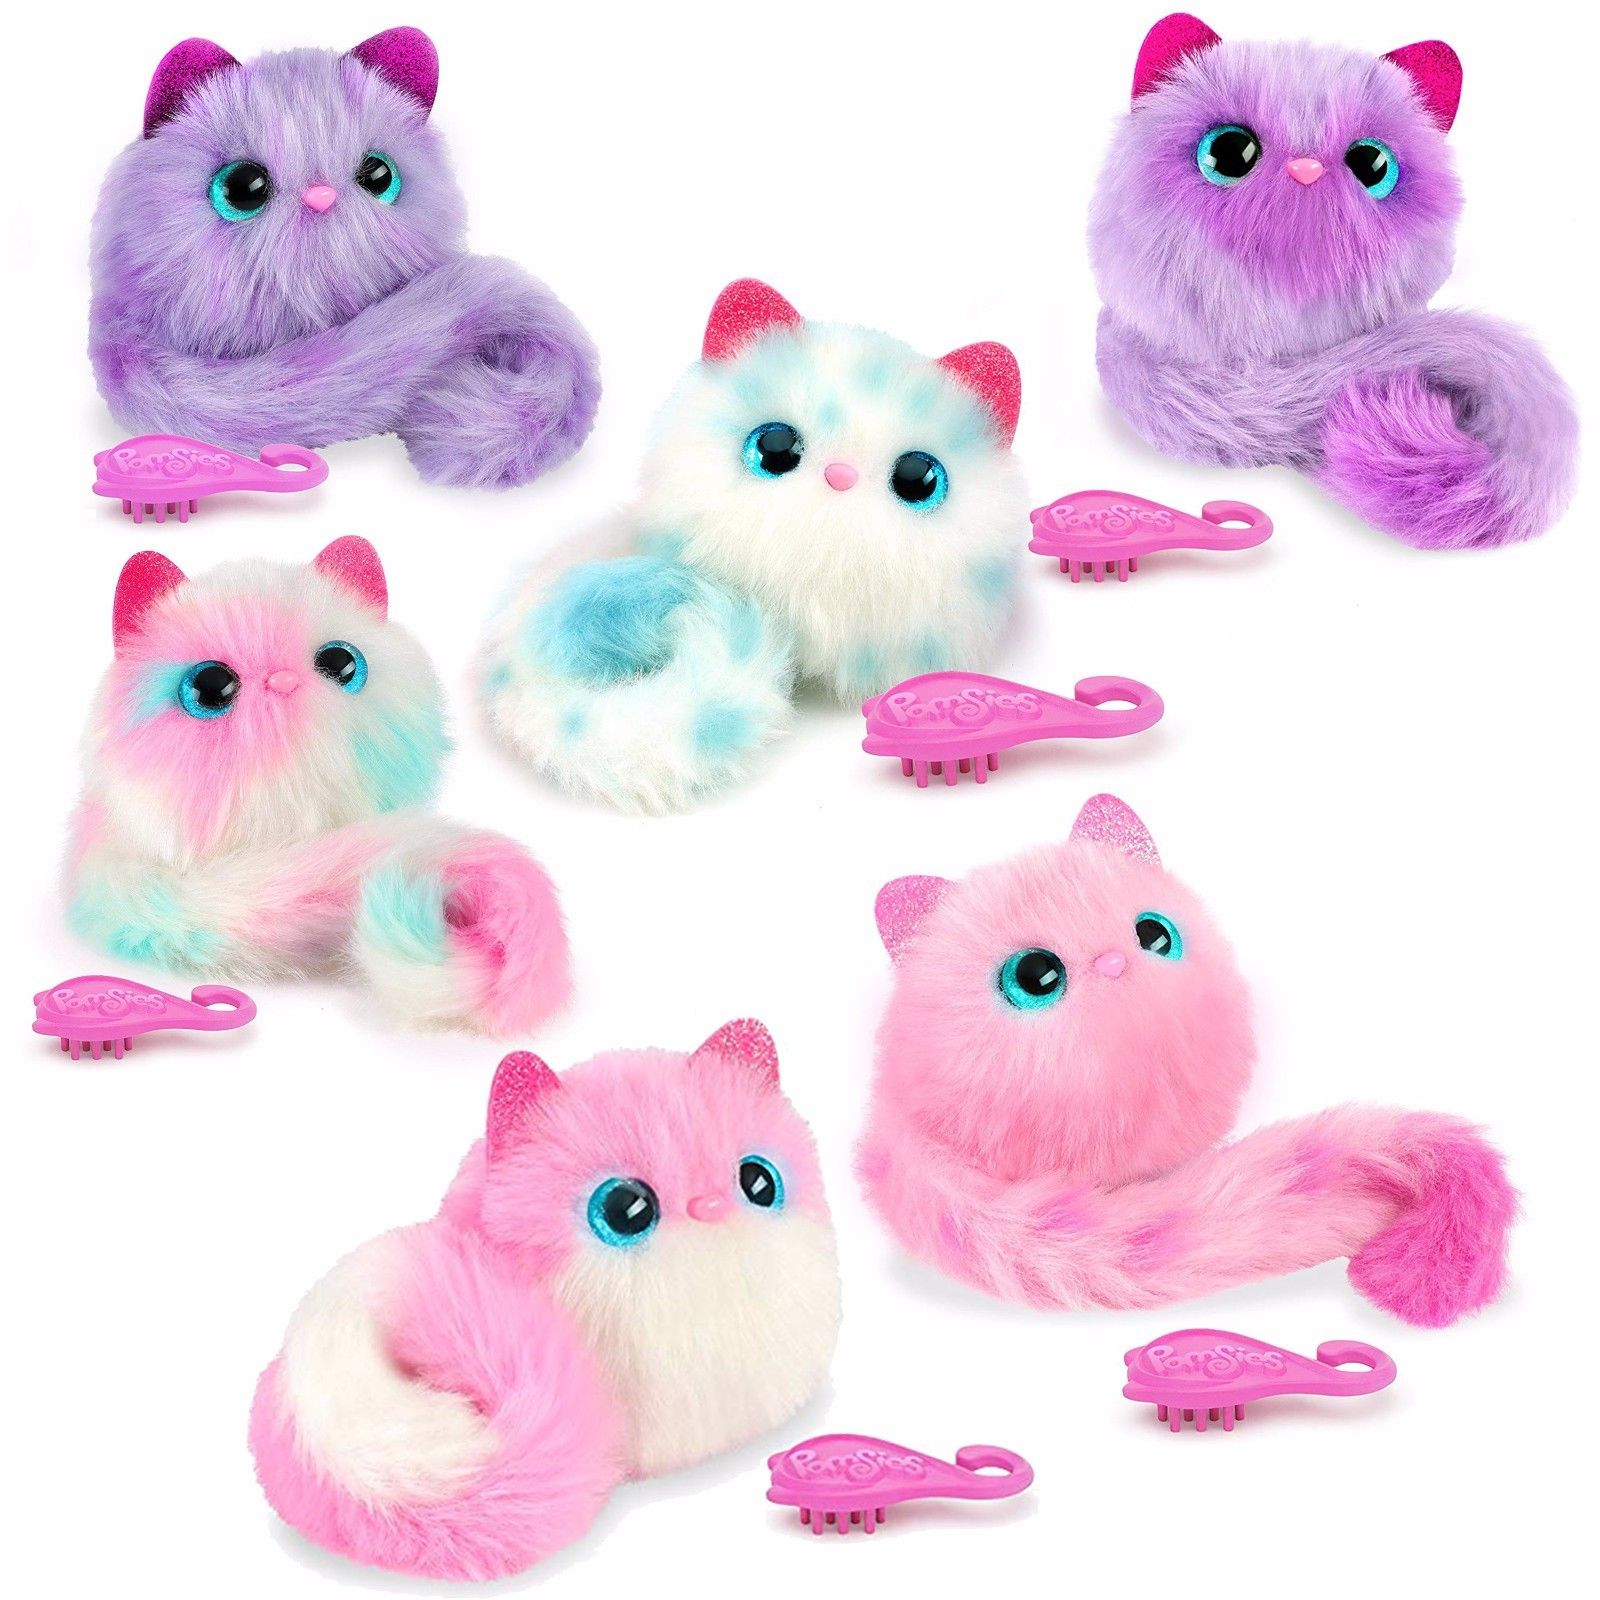 Pink pets. Pomsies. Кошки Pomsies. Игрушка мягкая Pomsies Patches интерактивная 01956. Fluffy Cat игрушка.